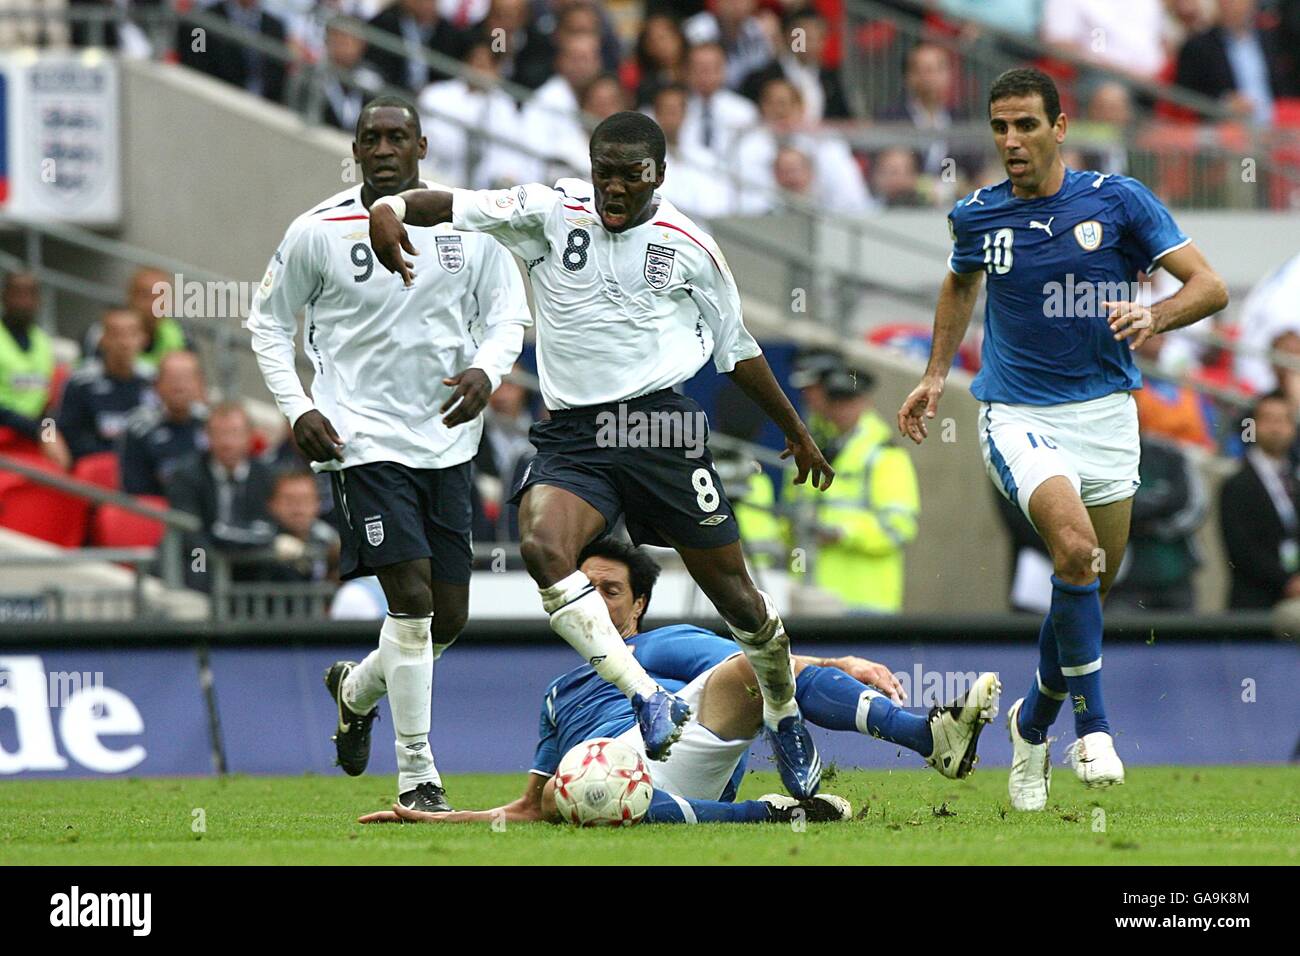 Soccer - UEFA European Championship 2008 Qualifying - Group E - England v Israel - Wembley Stadium. Israel's Idan Tal foul's England's Shaun Wright-Phillips as they battle for the ball Stock Photo